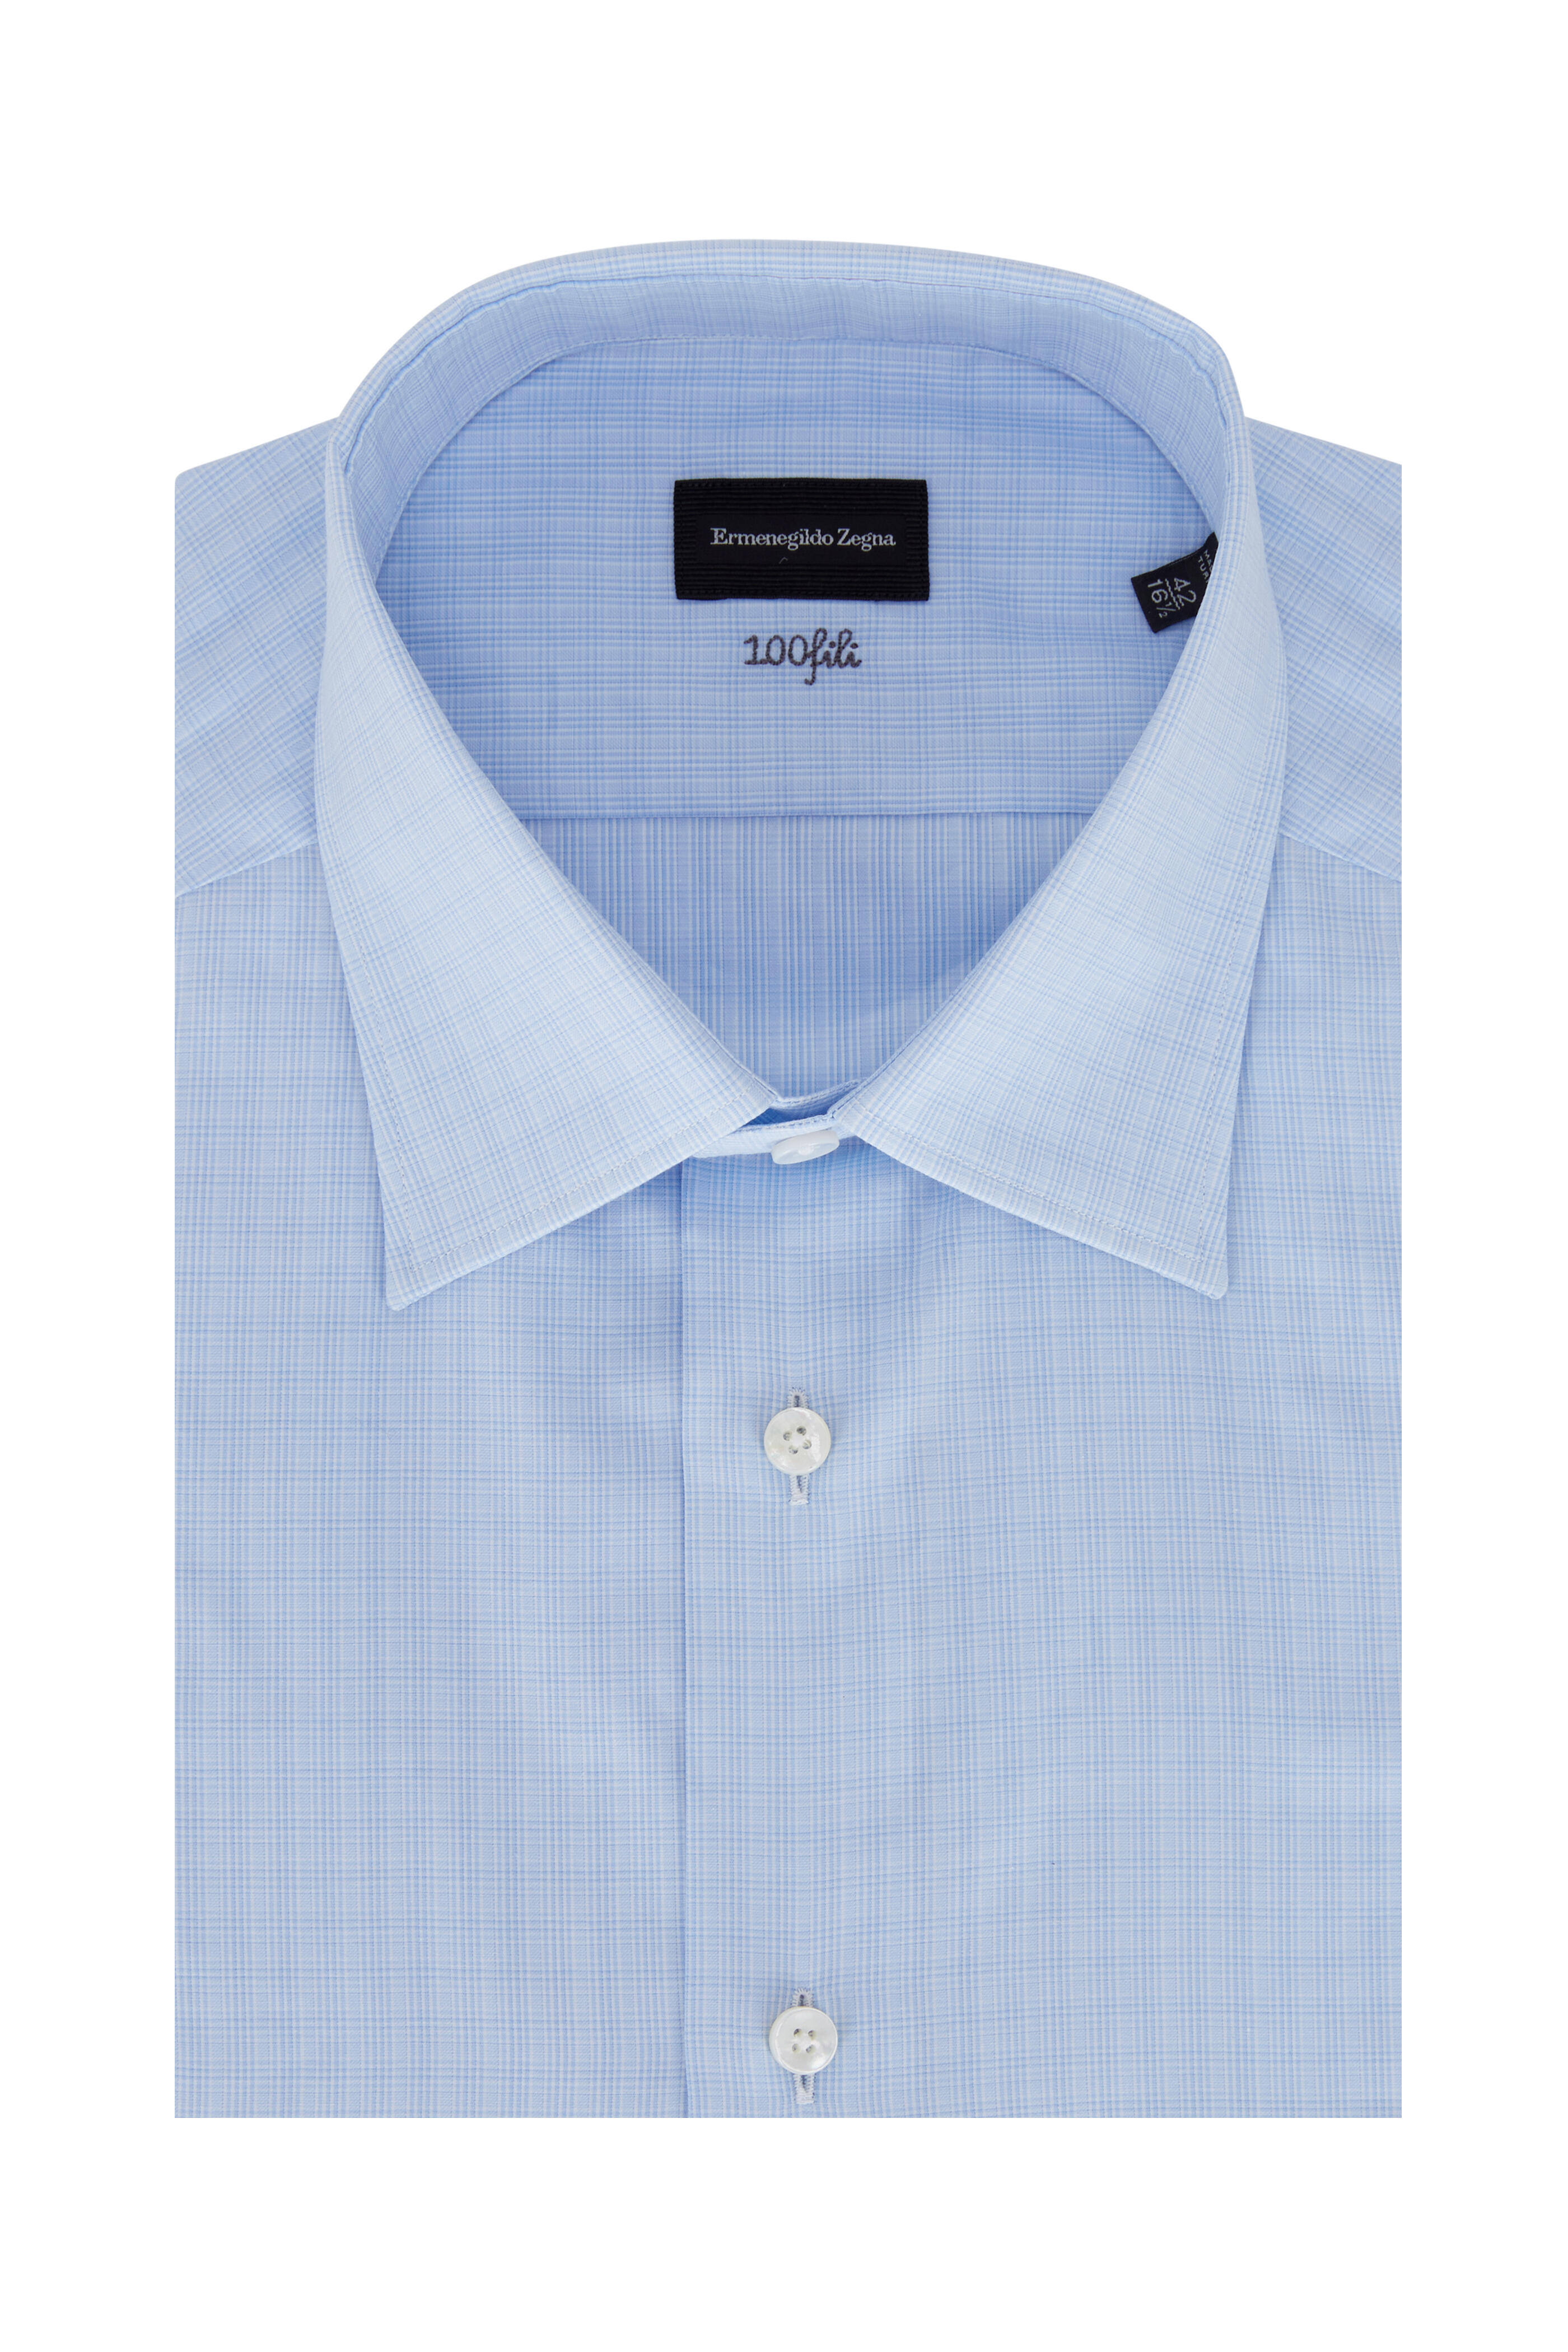 Zegna - 100fili Light Blue Check Cotton Dress Shirt